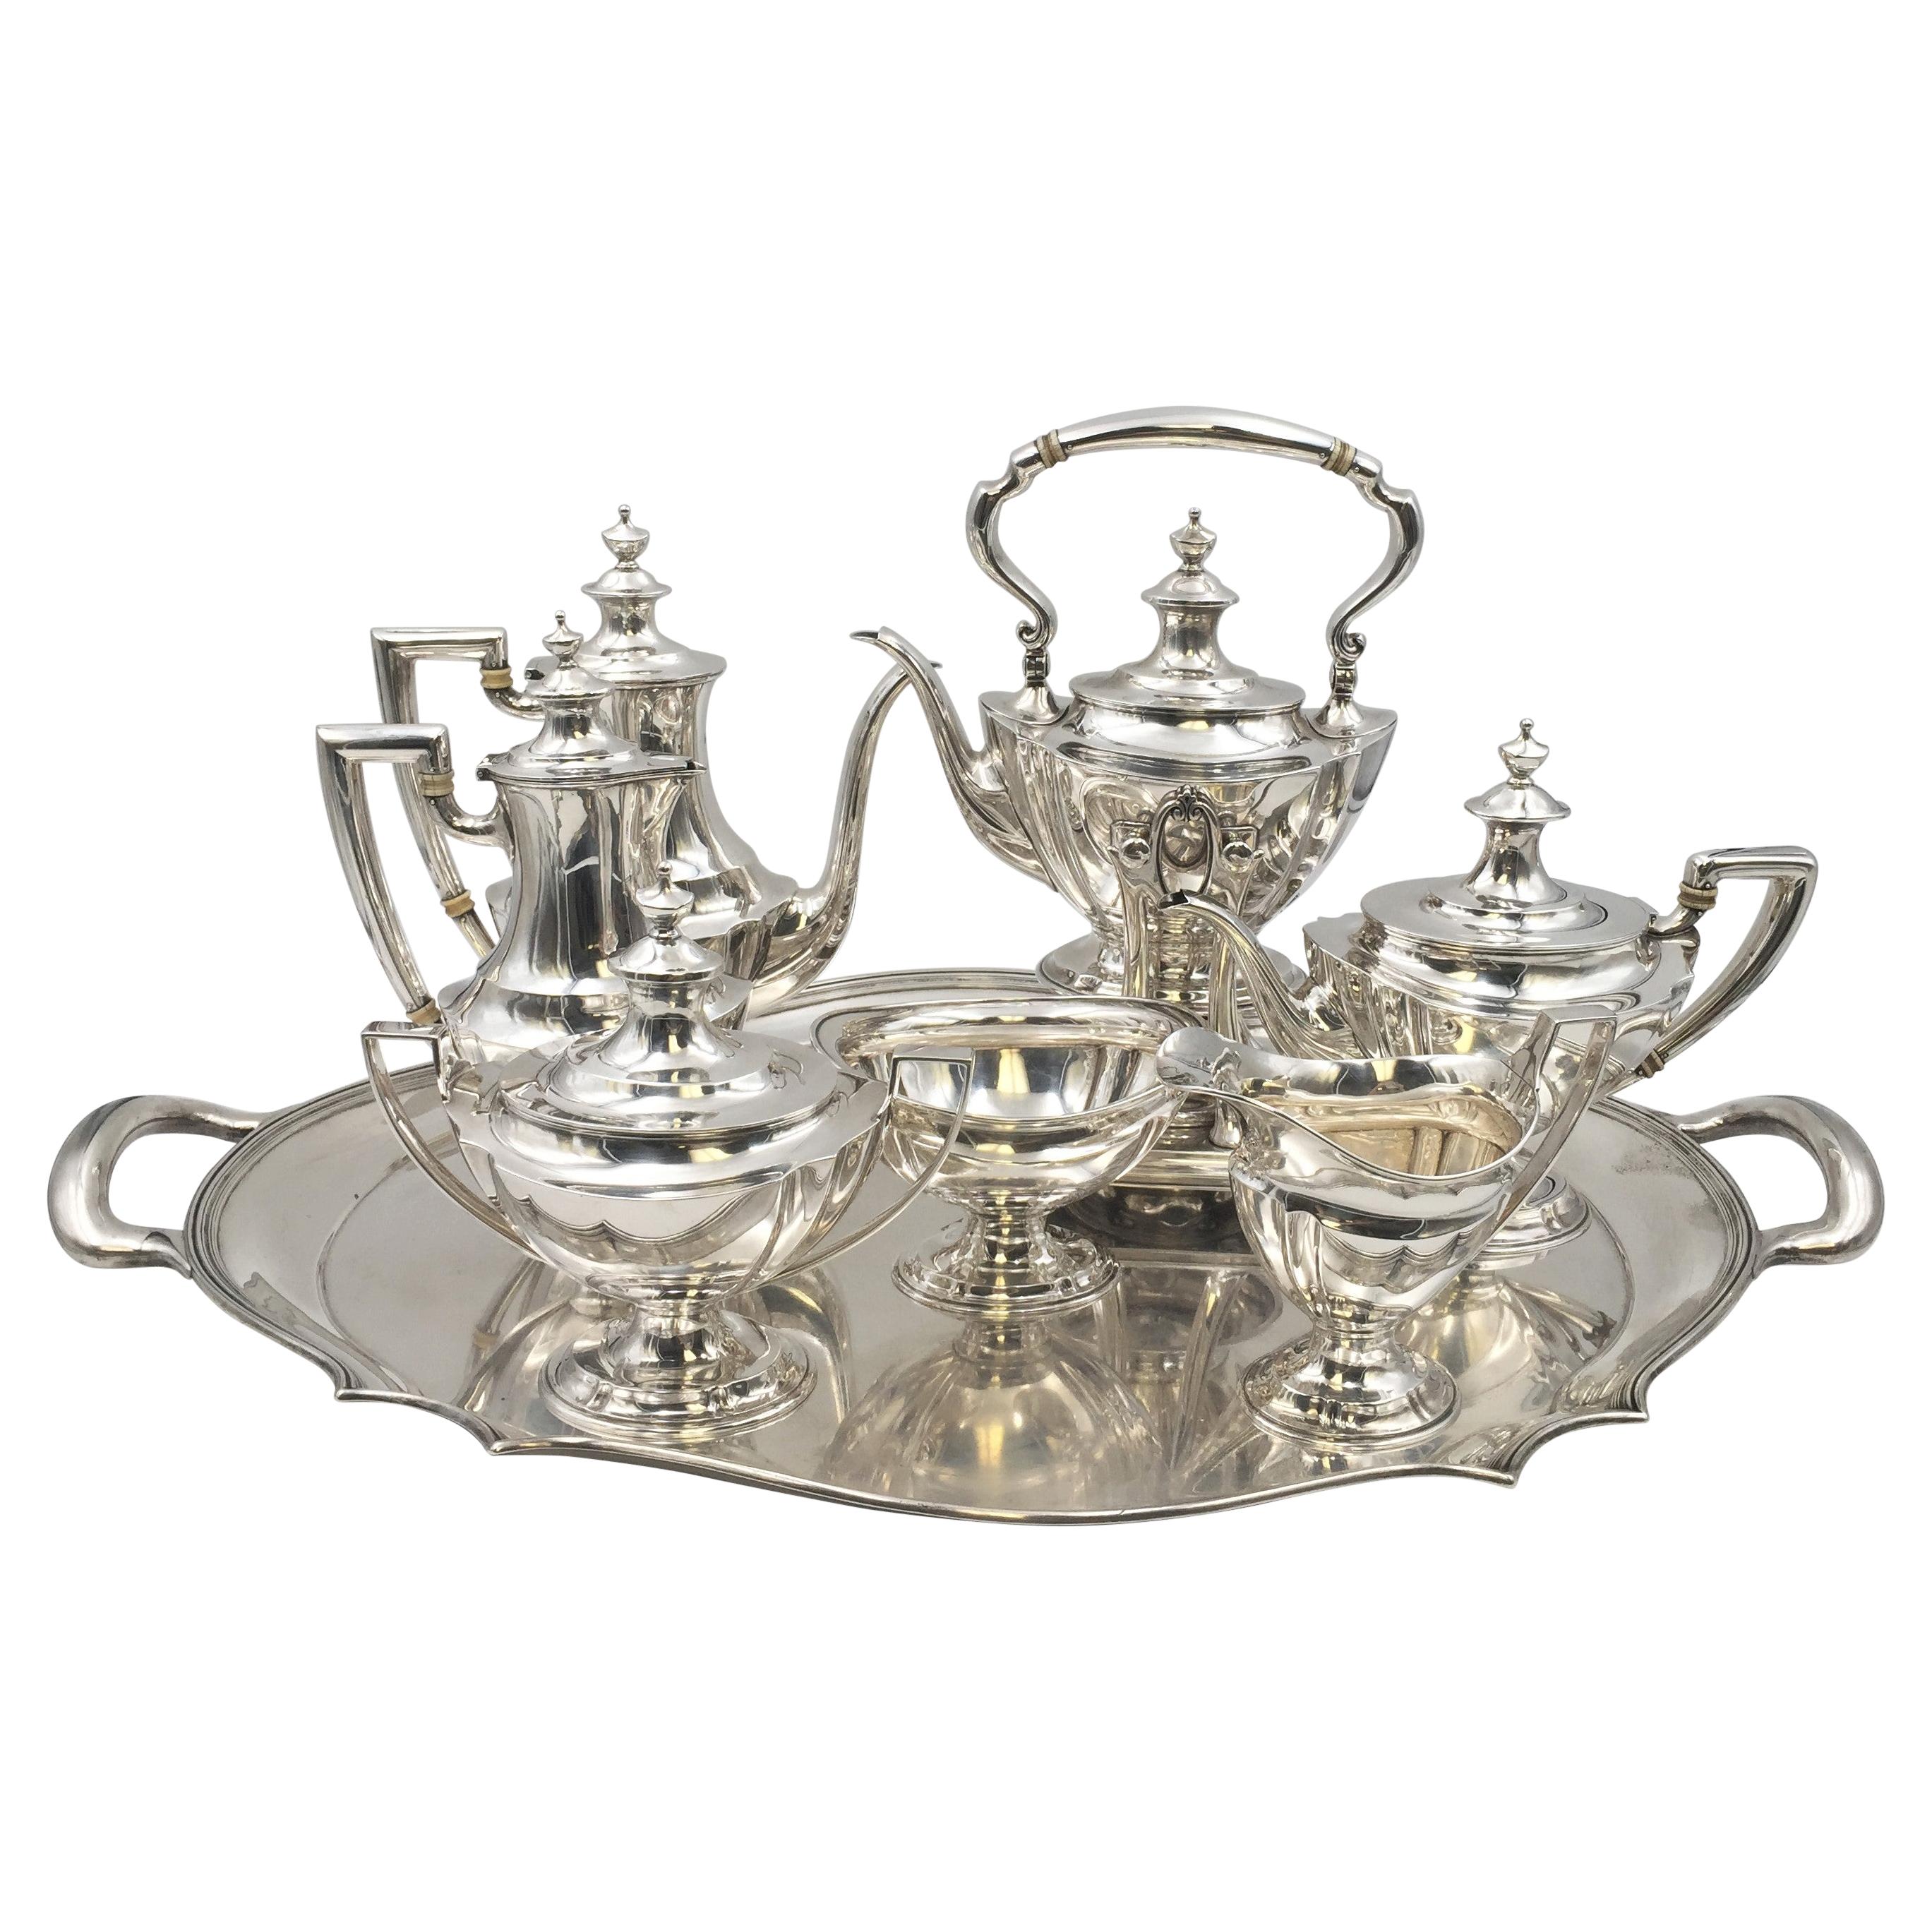 Tiffany & Co. 8-Piece Sterling Silver Tea / Coffee Service in Art Deco Style